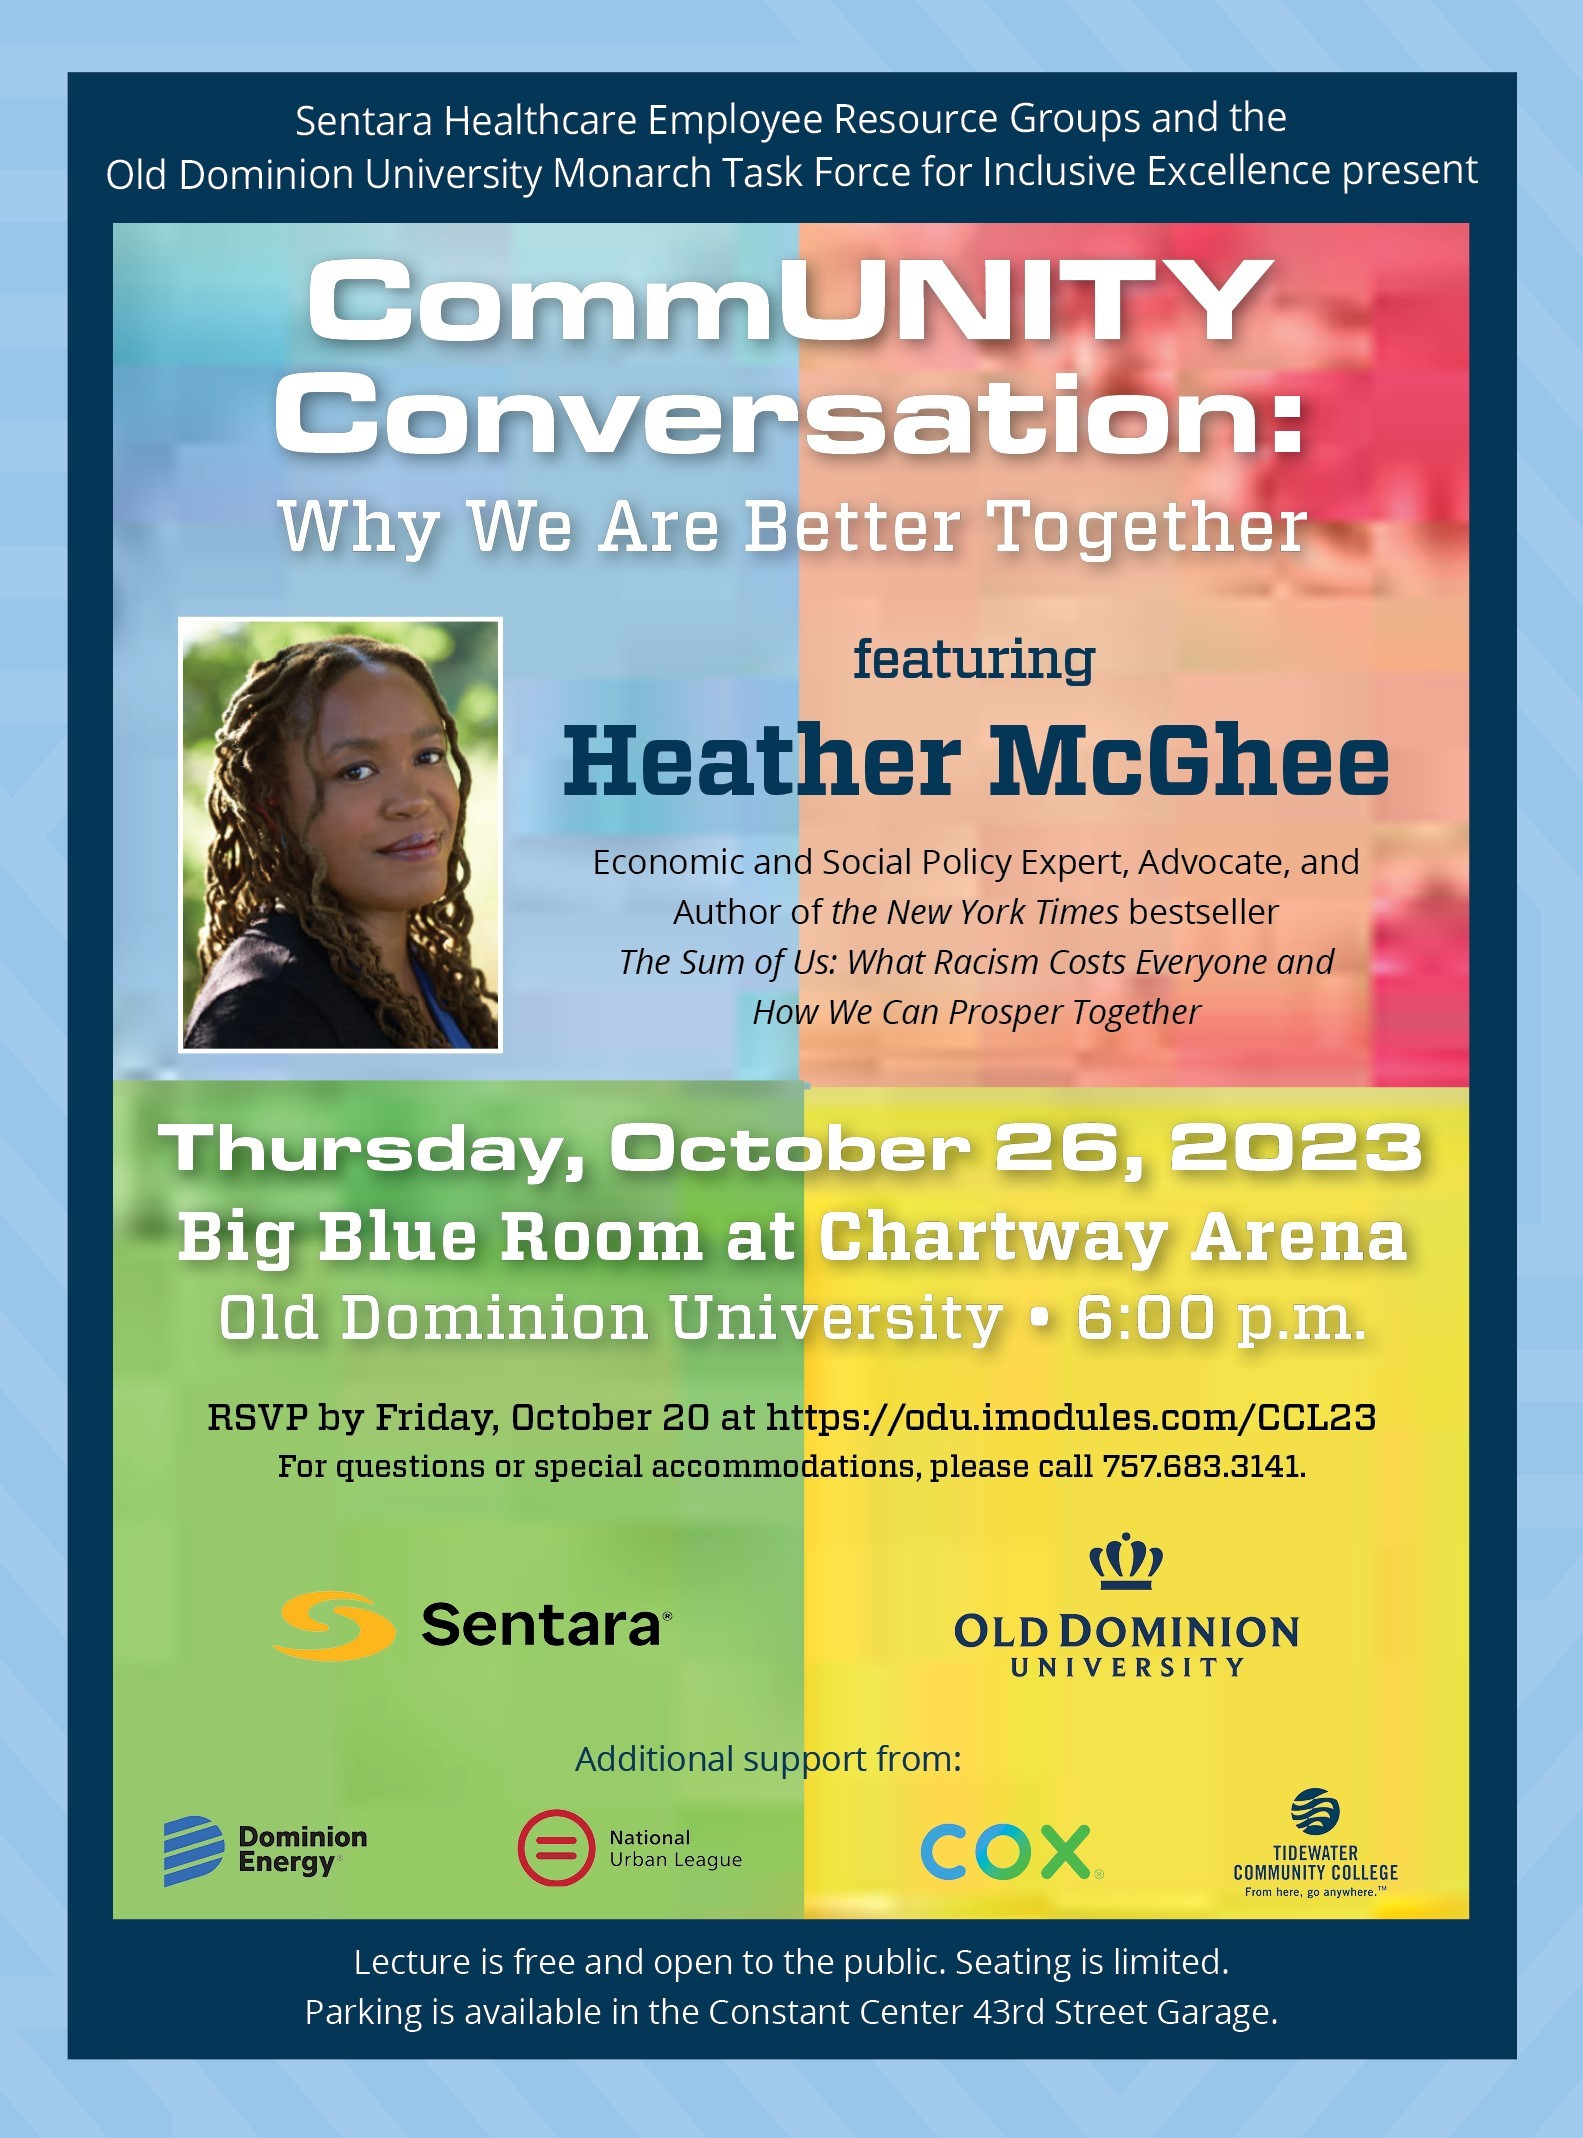 CommUNITY Conversation with author Heather McGhee